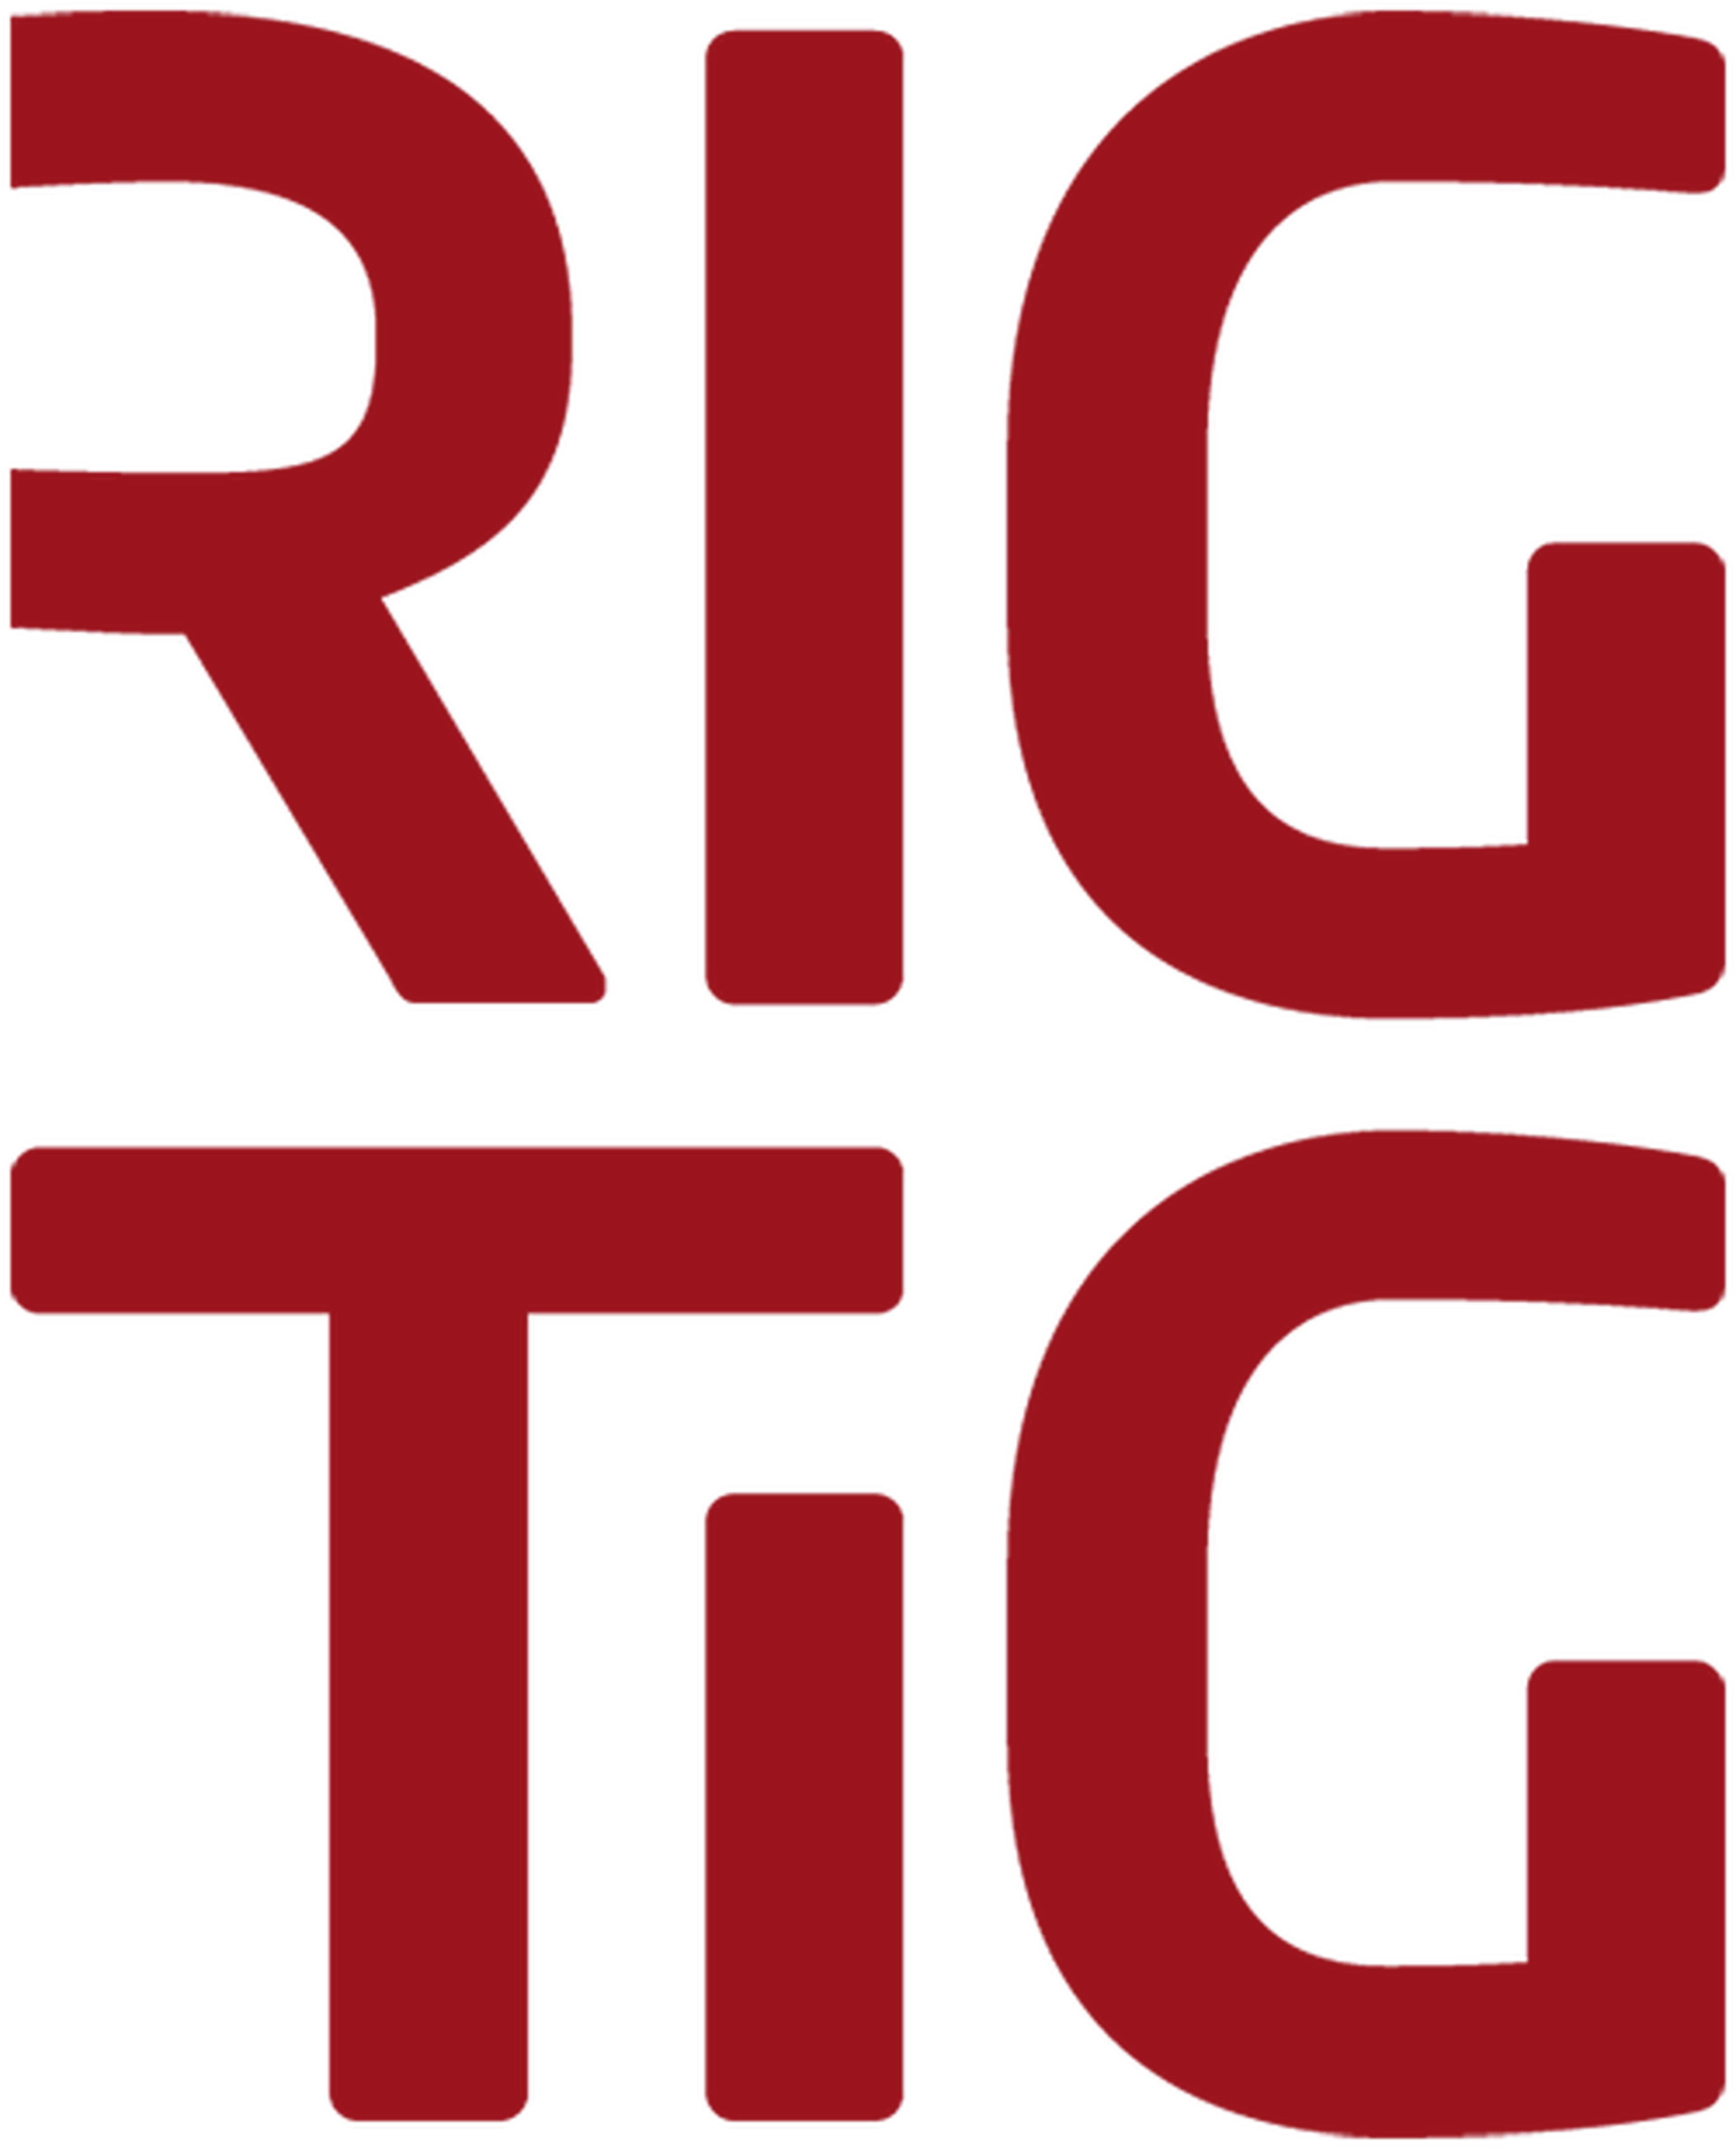 RIG-TIG logotype